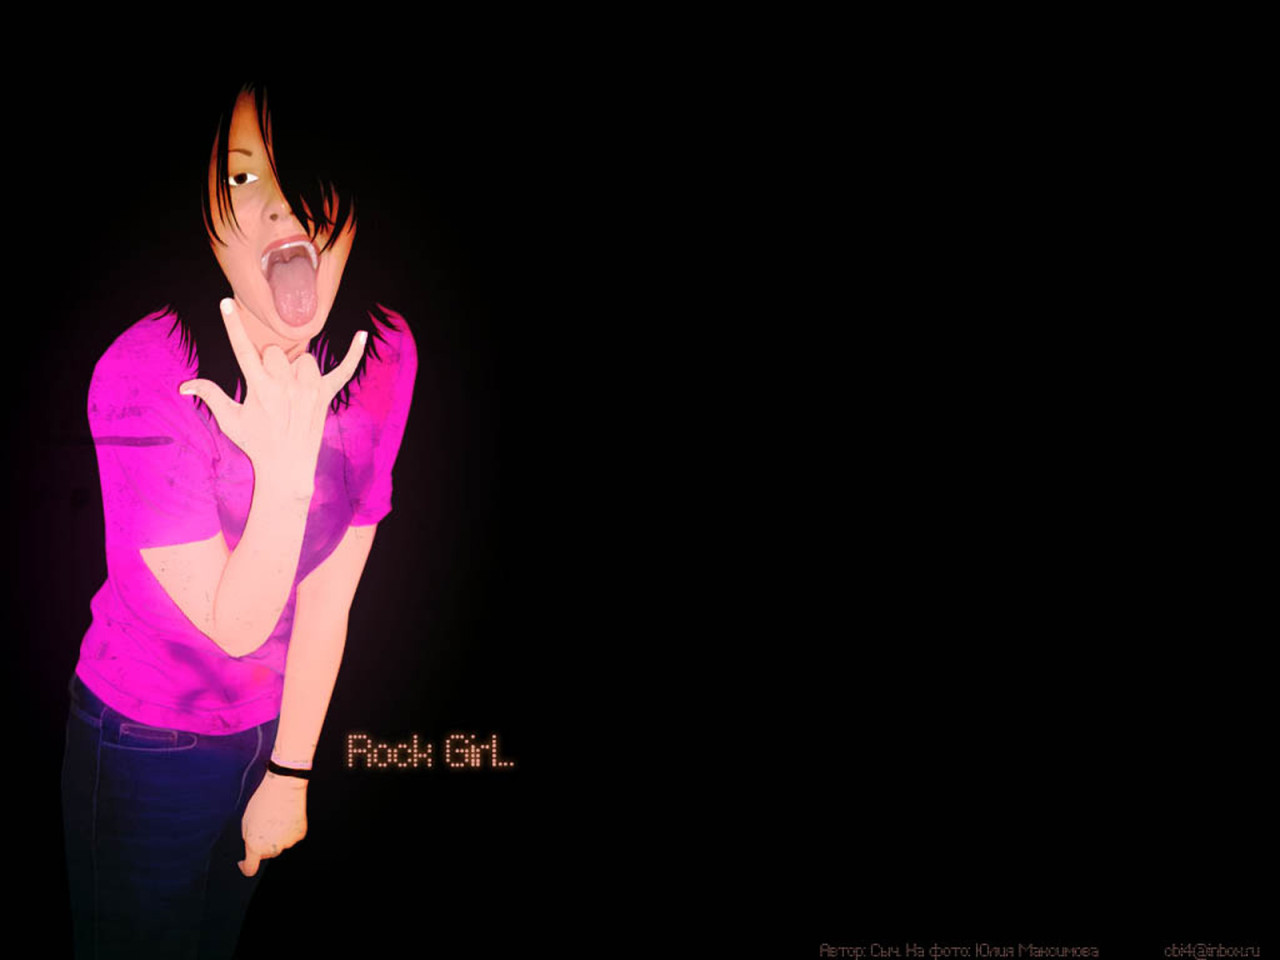 Emo Emo rock girl 011606 jpg 1280x960